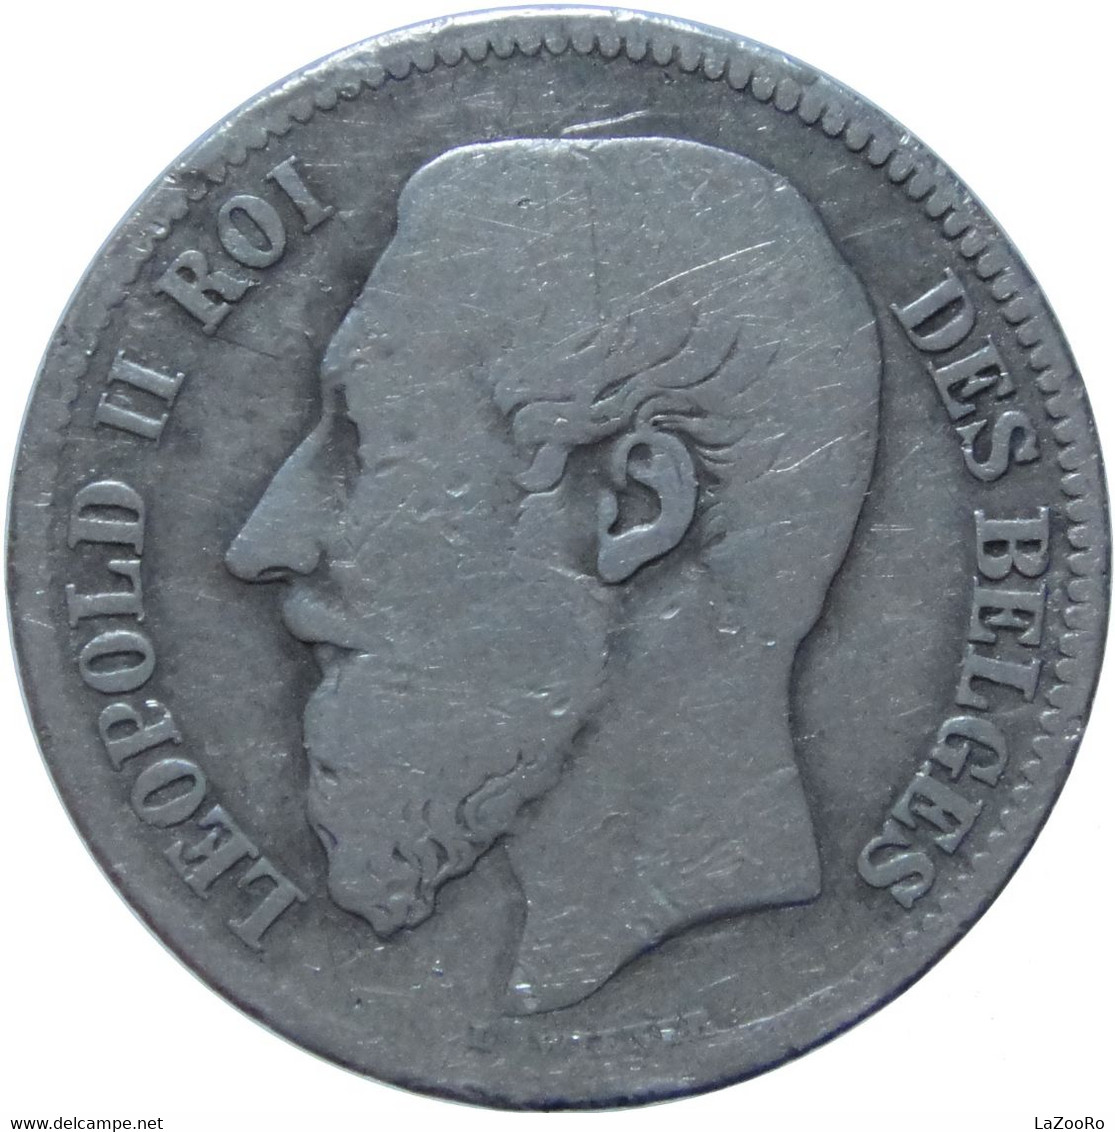 LaZooRo: Belgium 1 Franc 1867 VF - Silver - 1 Franc